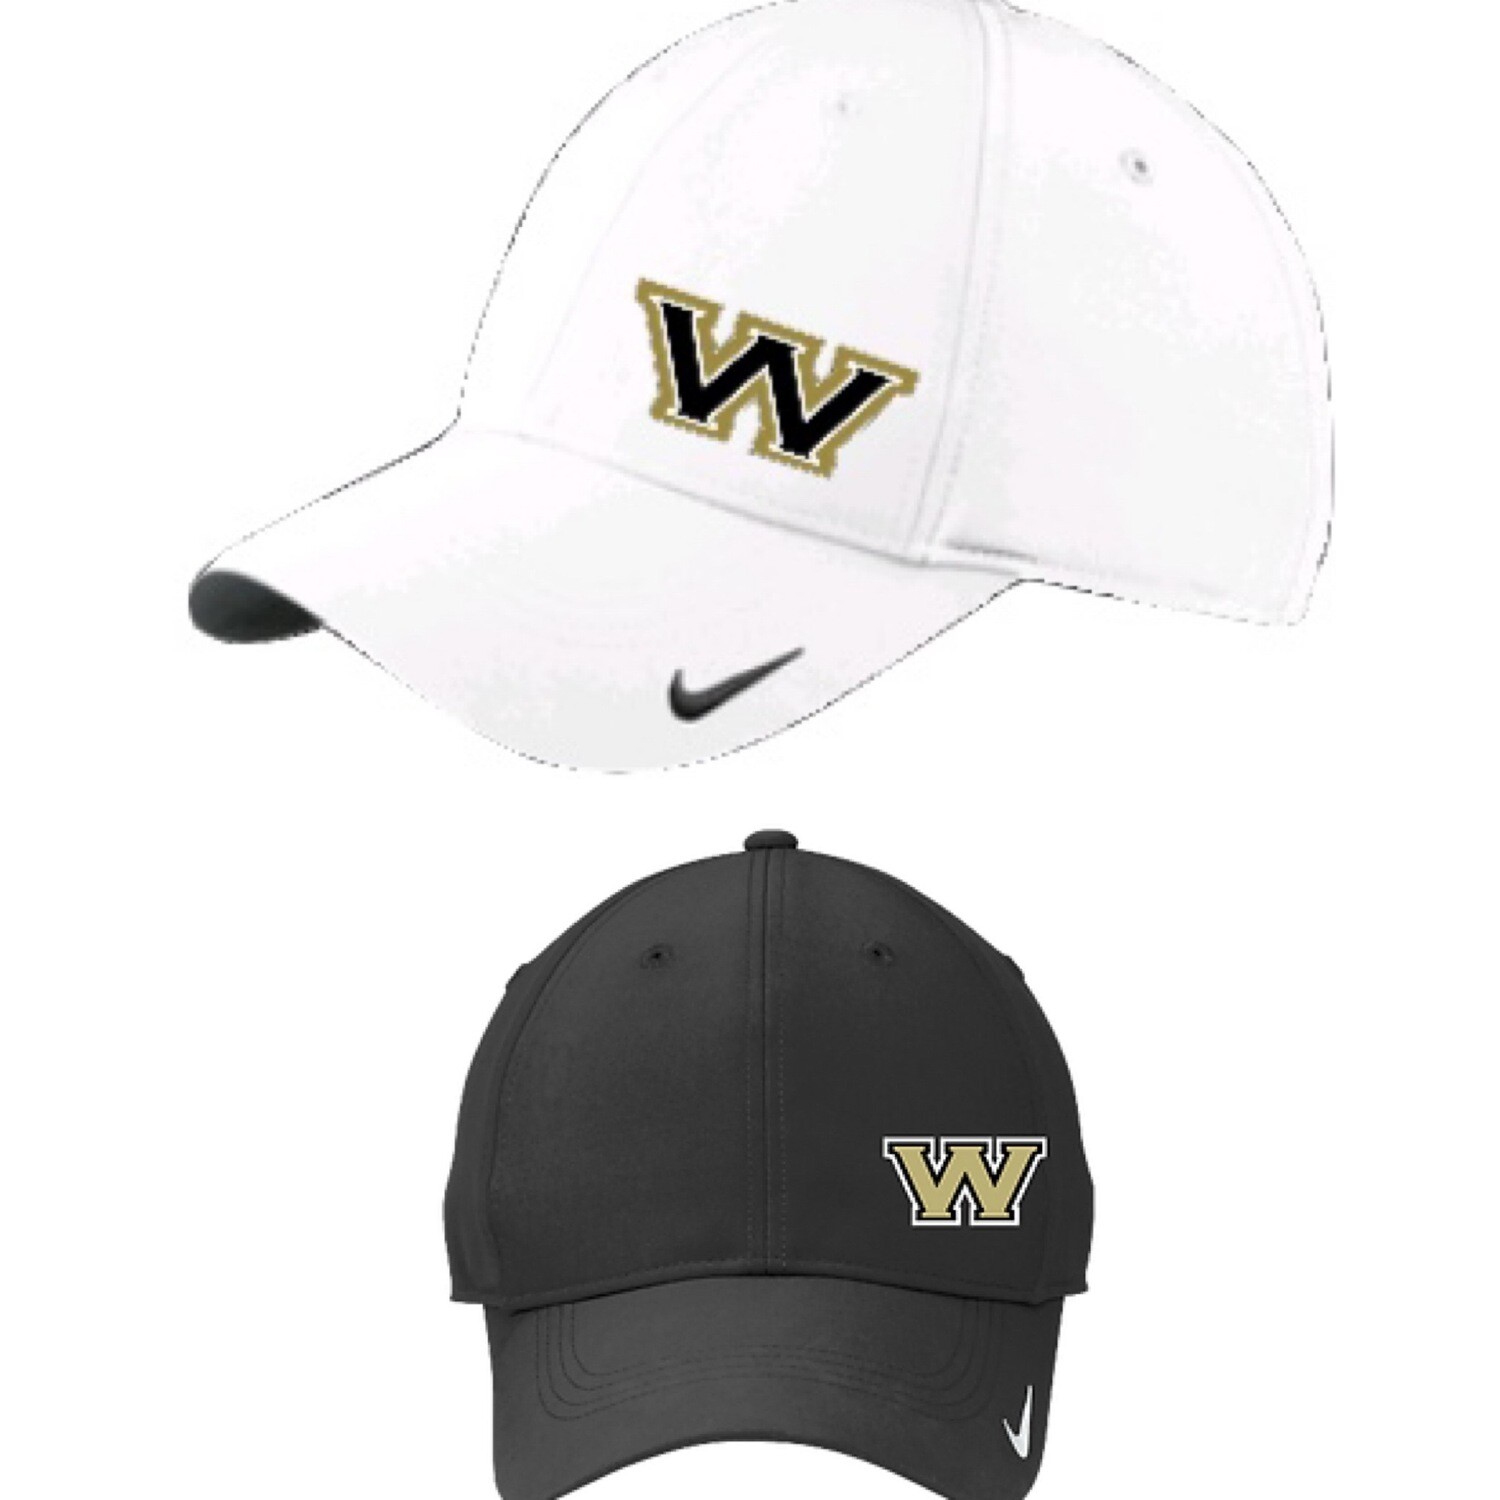 Nike Hat "W"